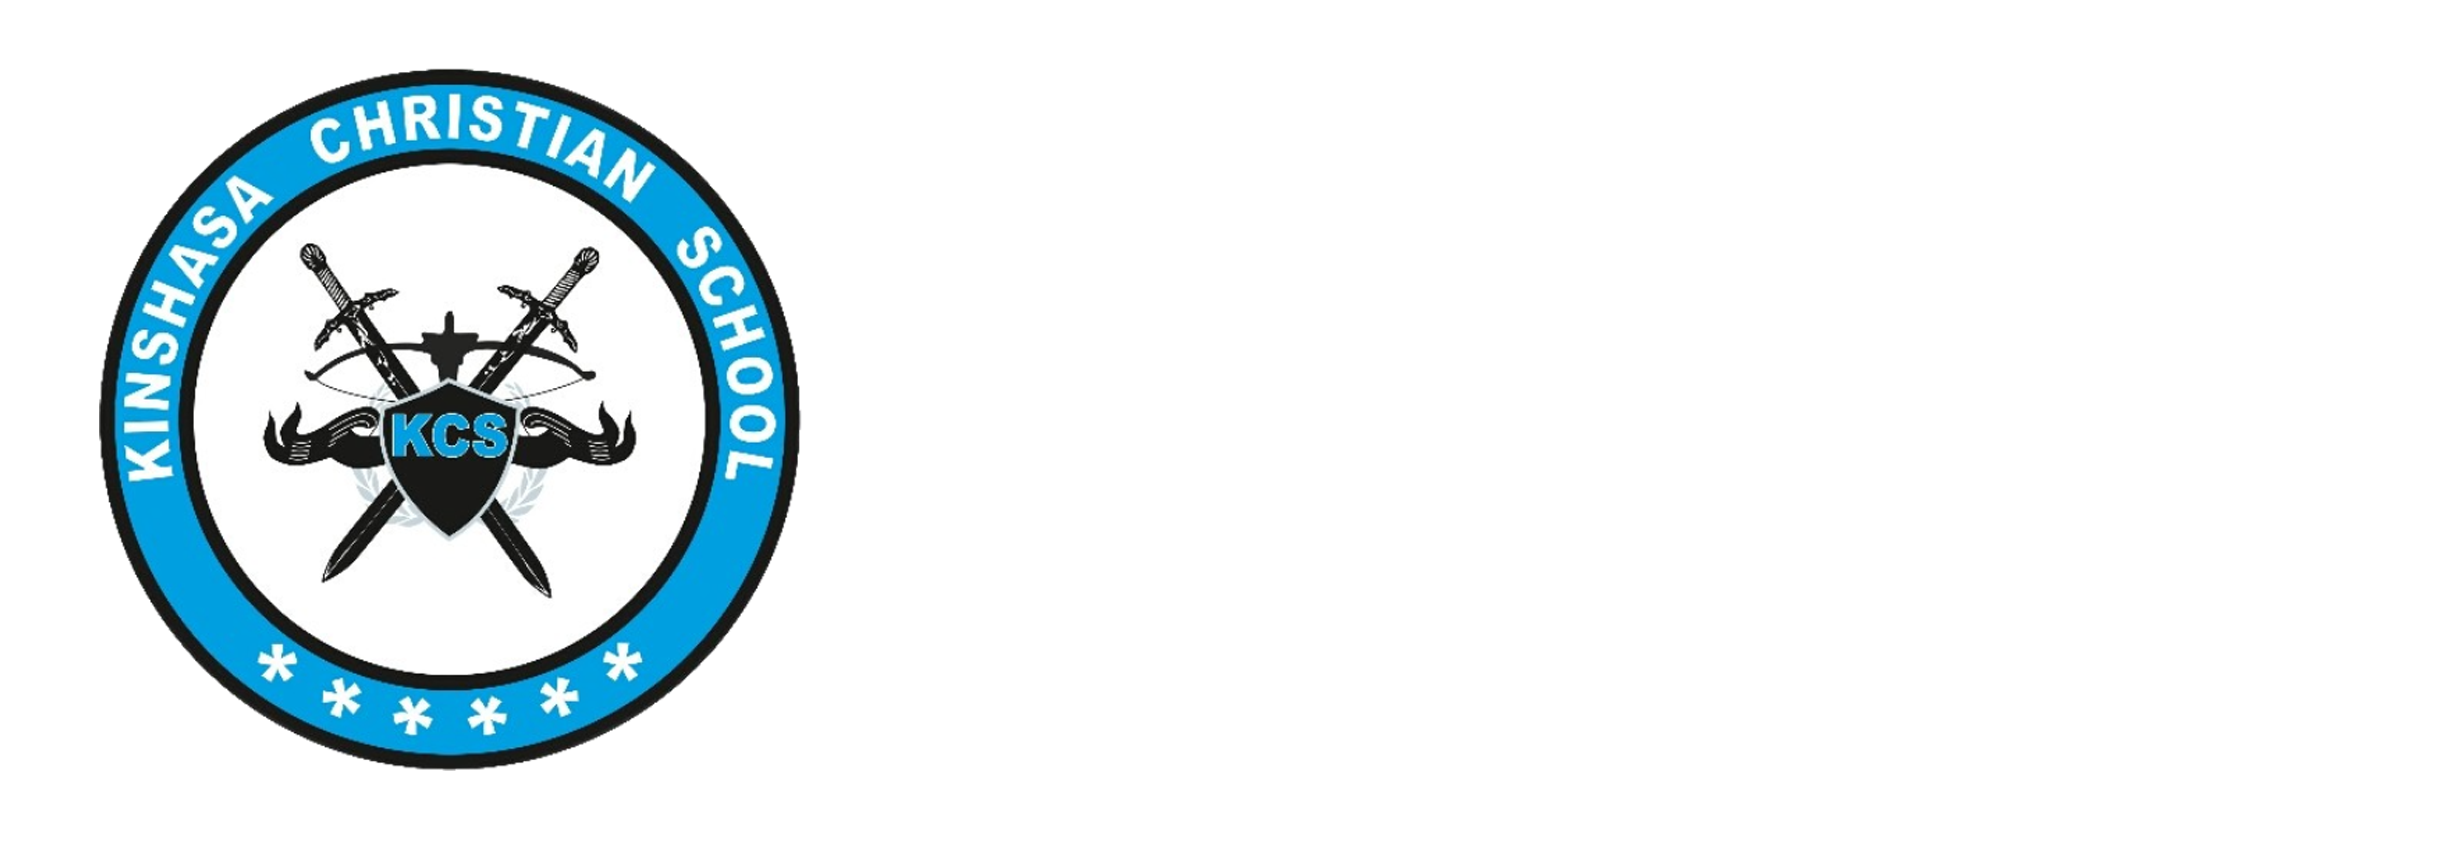 KINSHASA CHRISTIAN SCHOOL